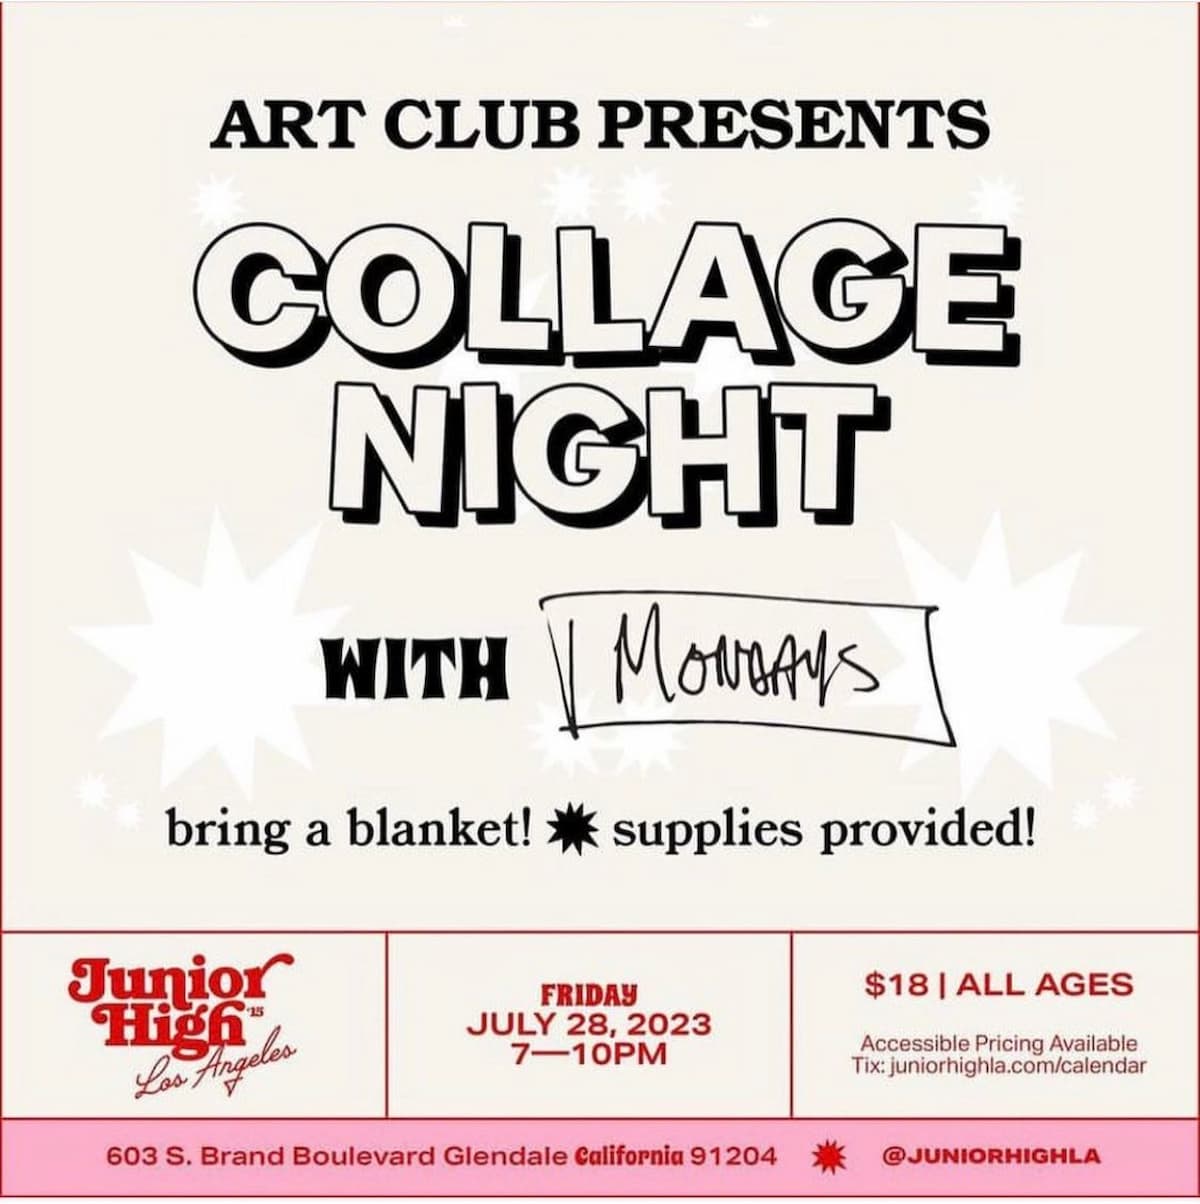 Art Club Presents: Collage Night with Mondays